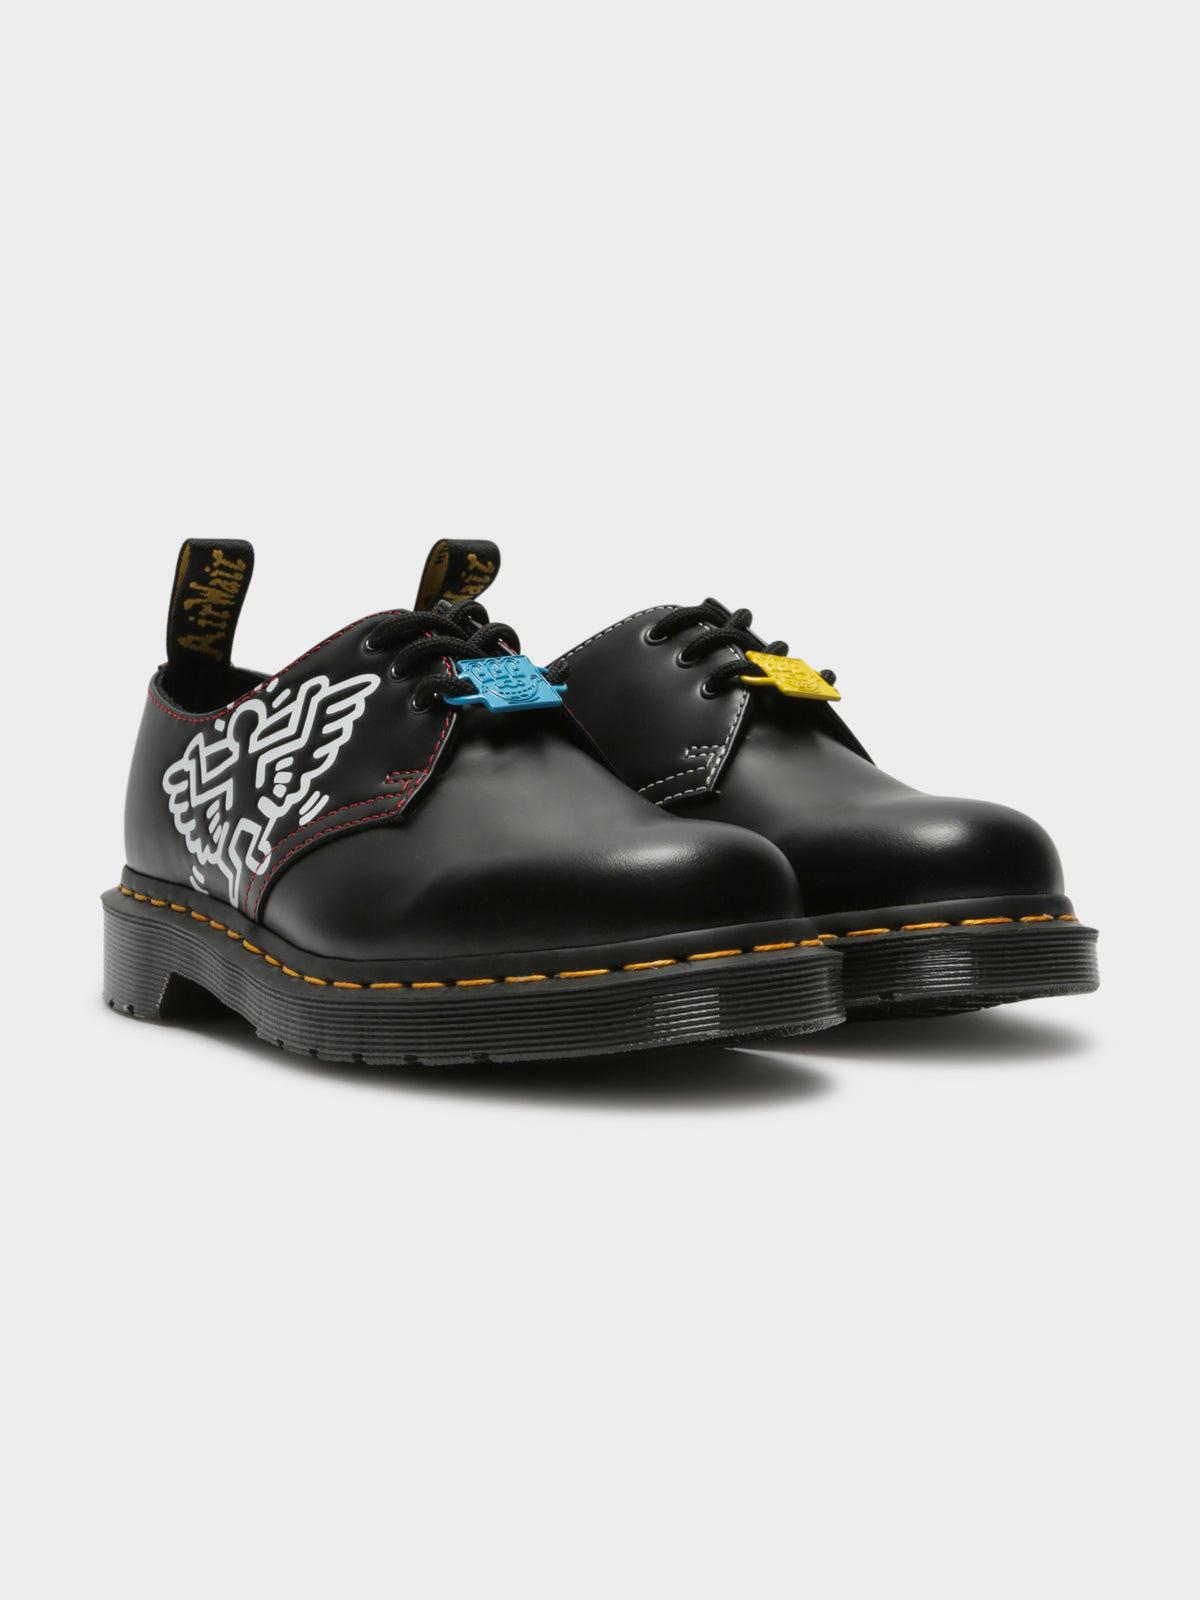 Unisex 1461 Keith Haring Dress Shoe in Black